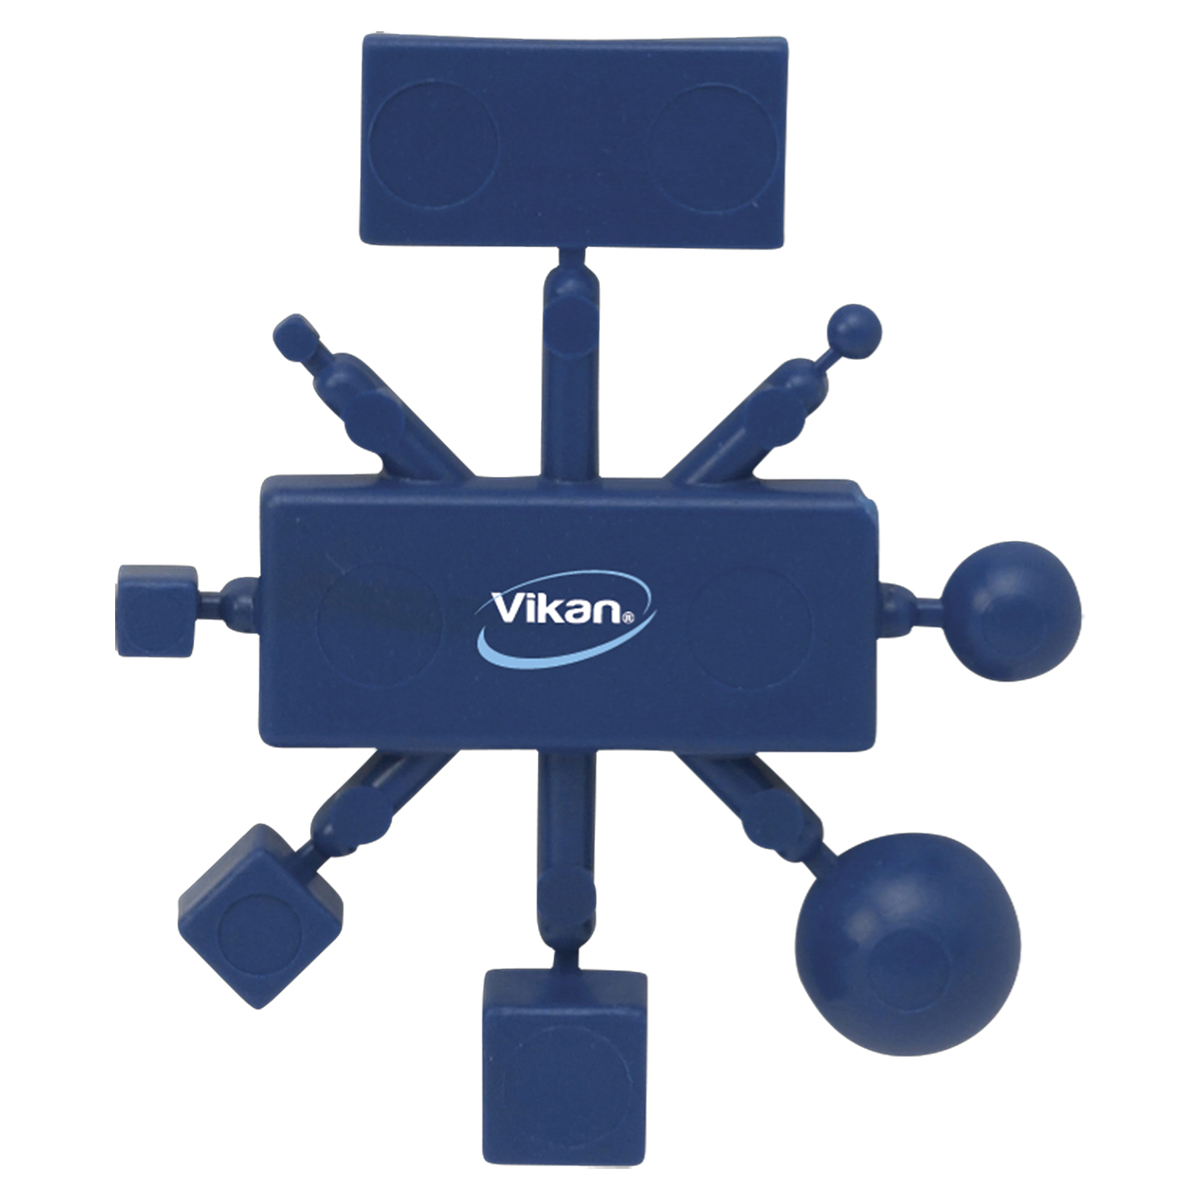 Vikan Test-Kit für Metalldetektion